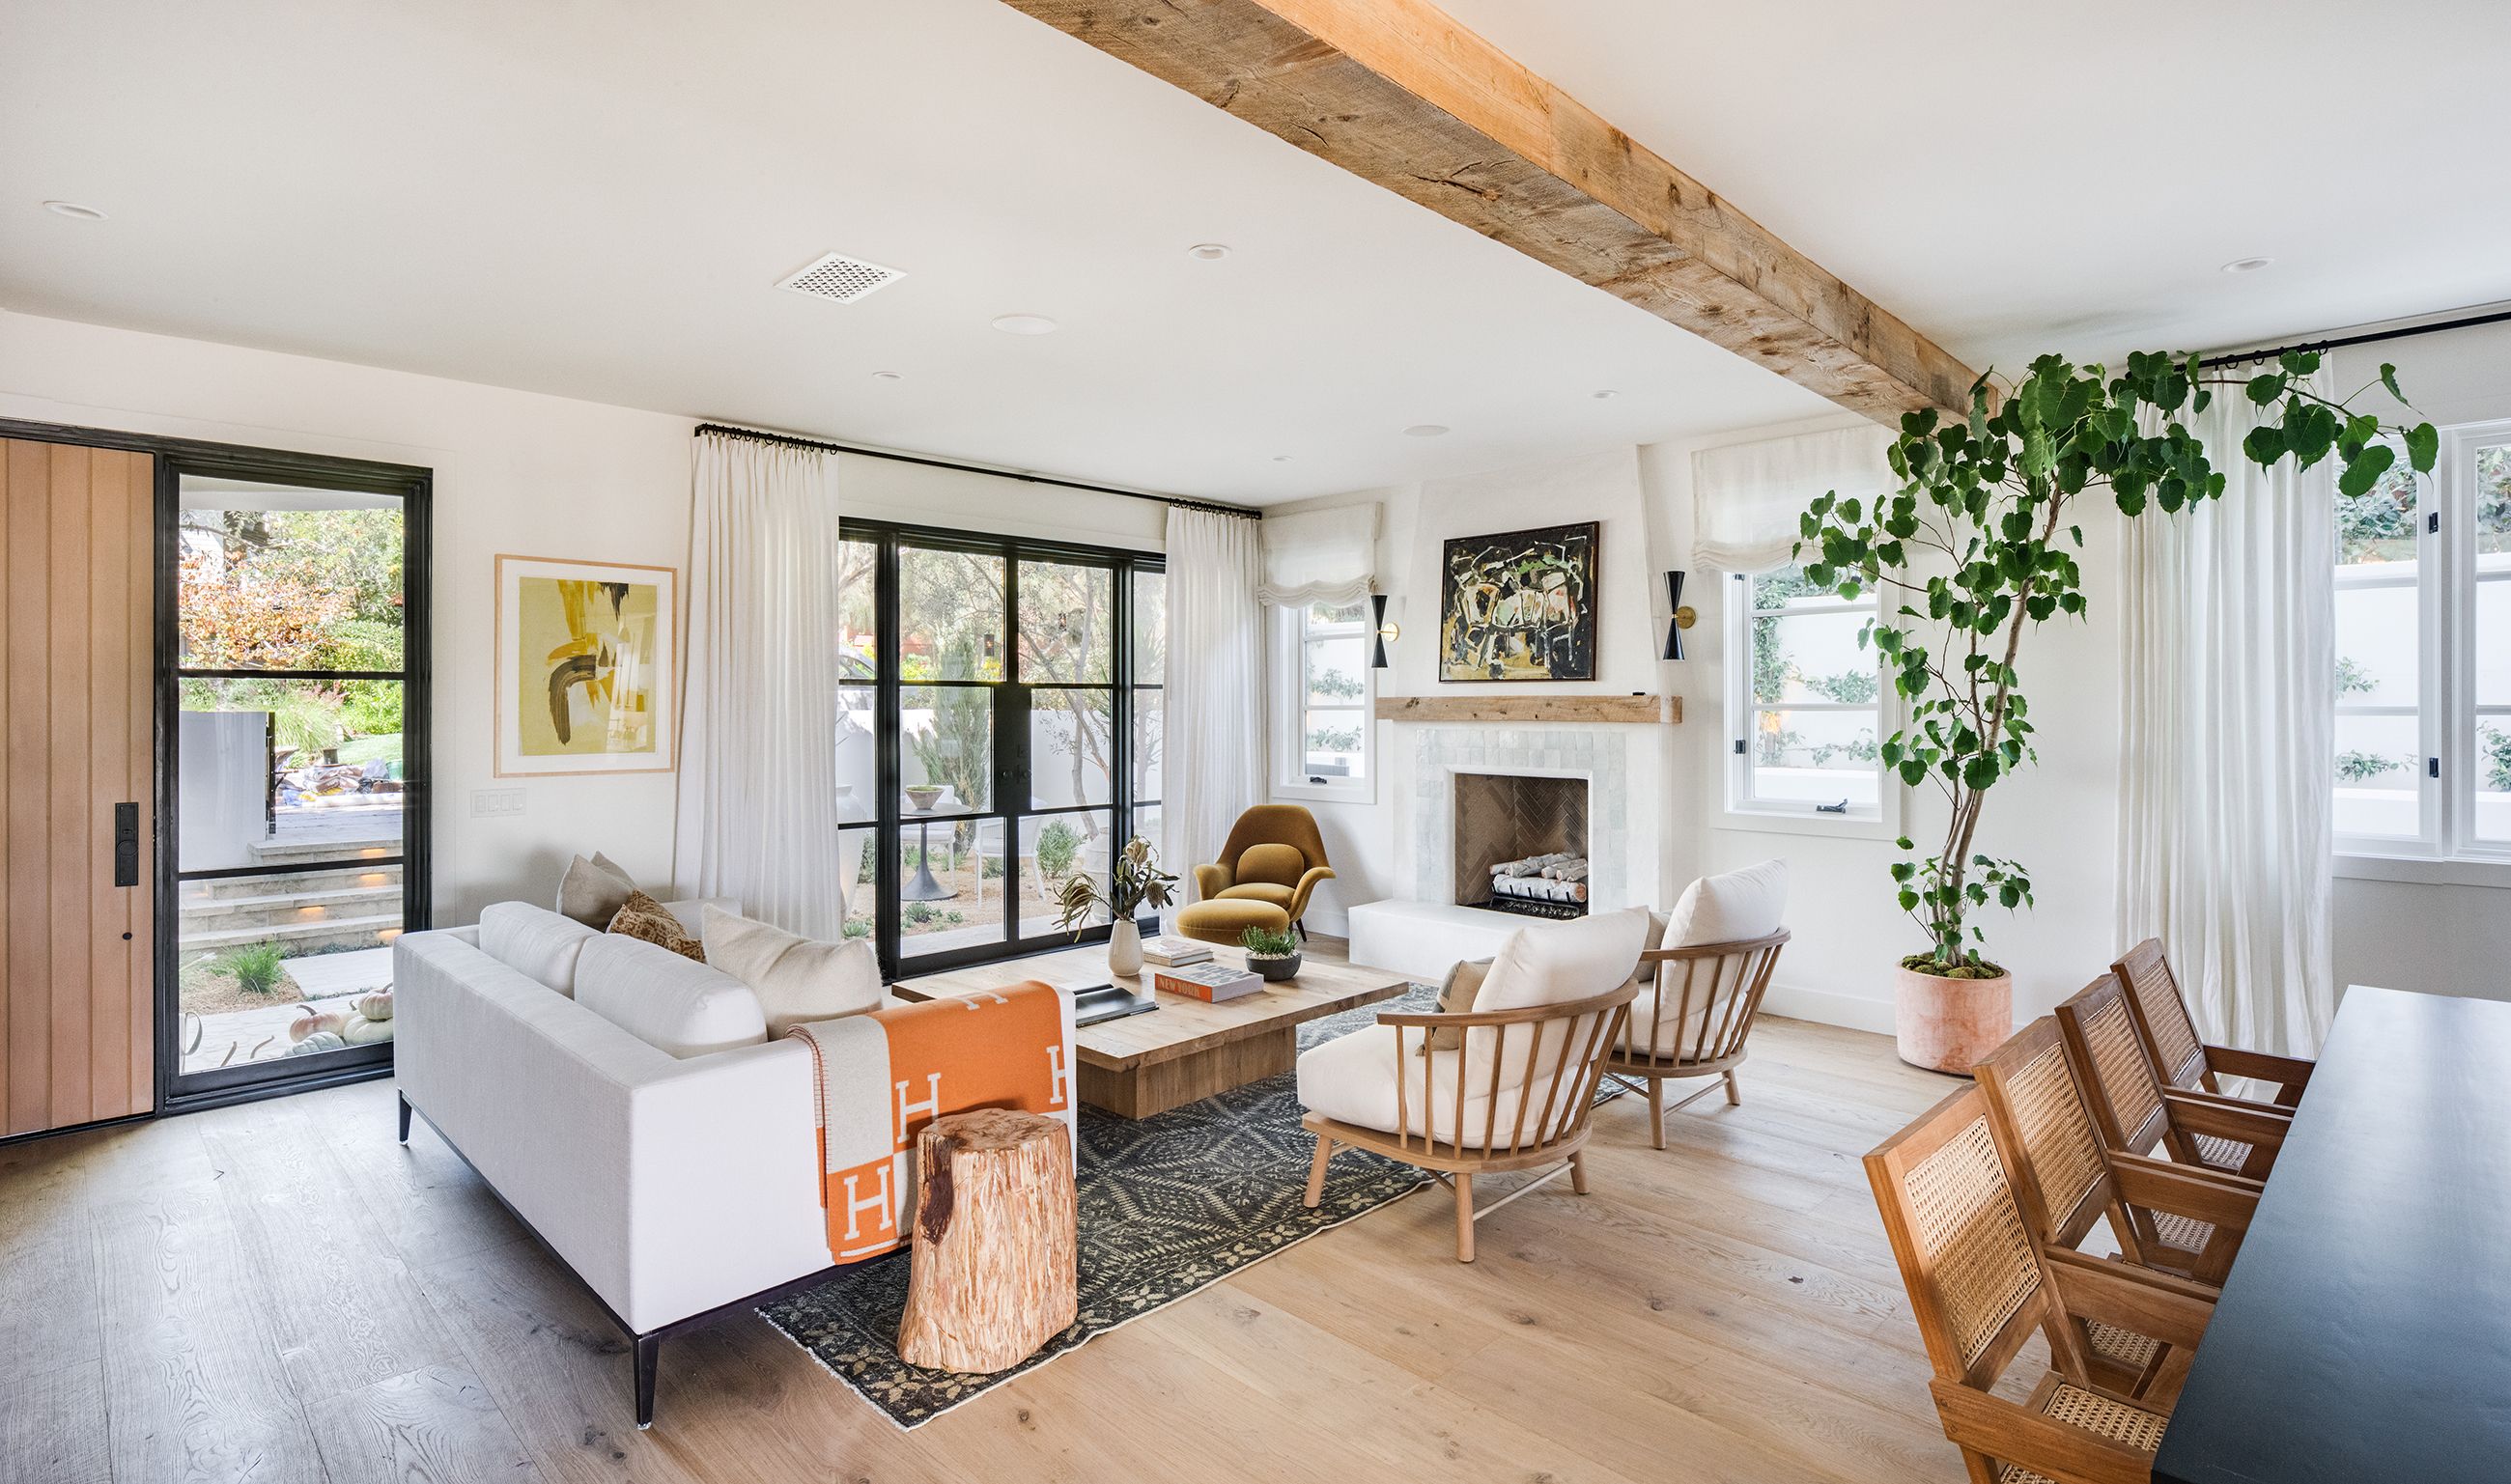 70 Stunning Living Room Ideas Chic, Cute Living Room Decorating Ideas